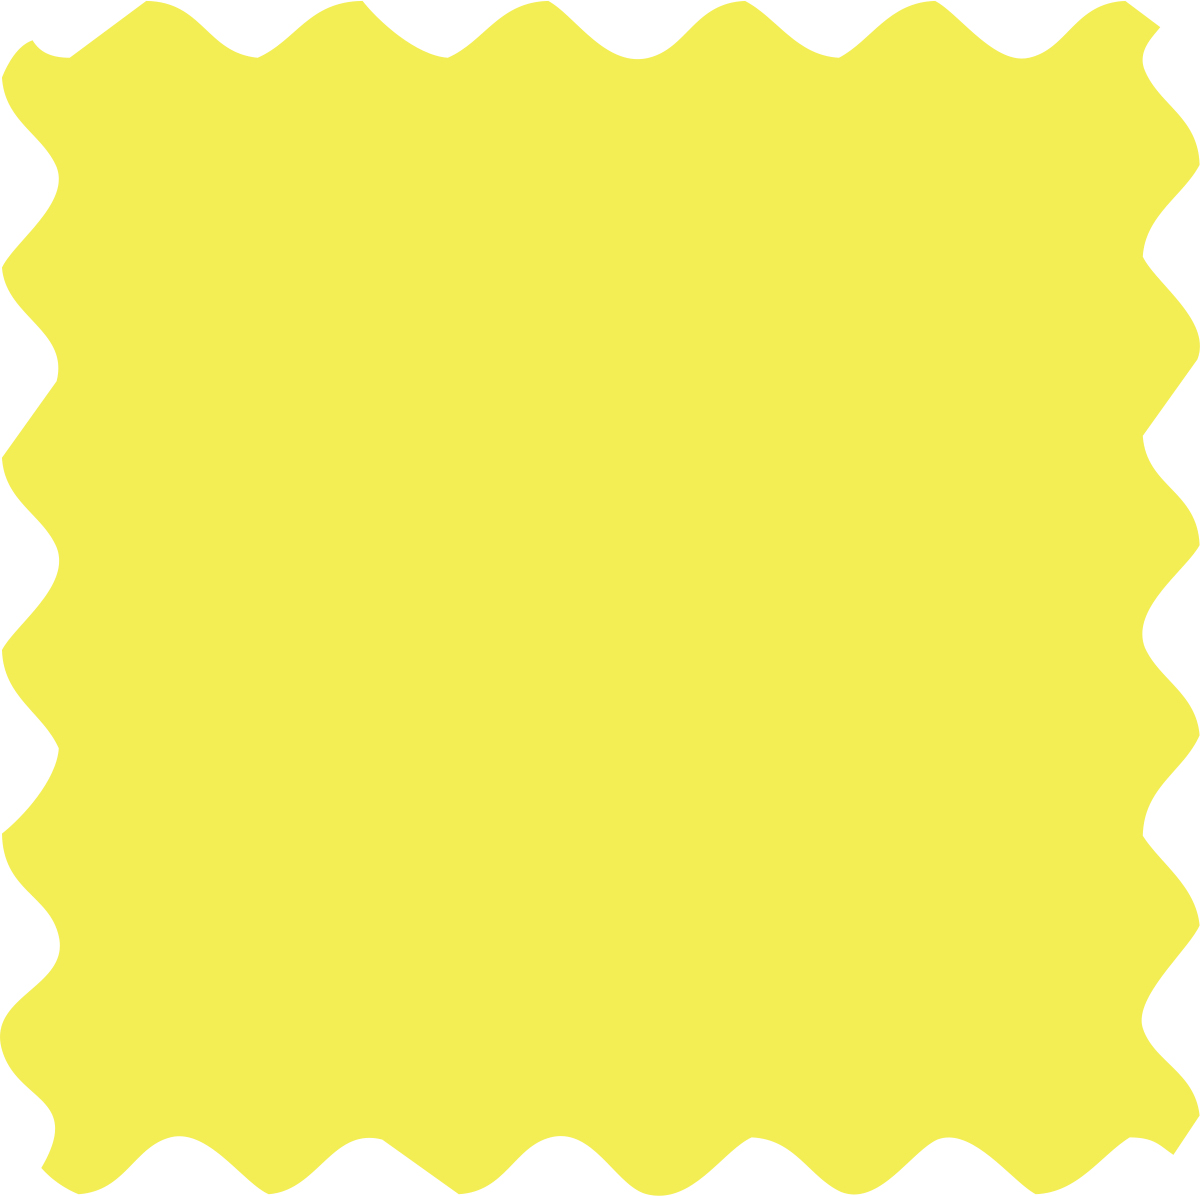 Fabric Creations™ Neon Black Light Fabric Paint - Yellow, 2 oz. - 44661